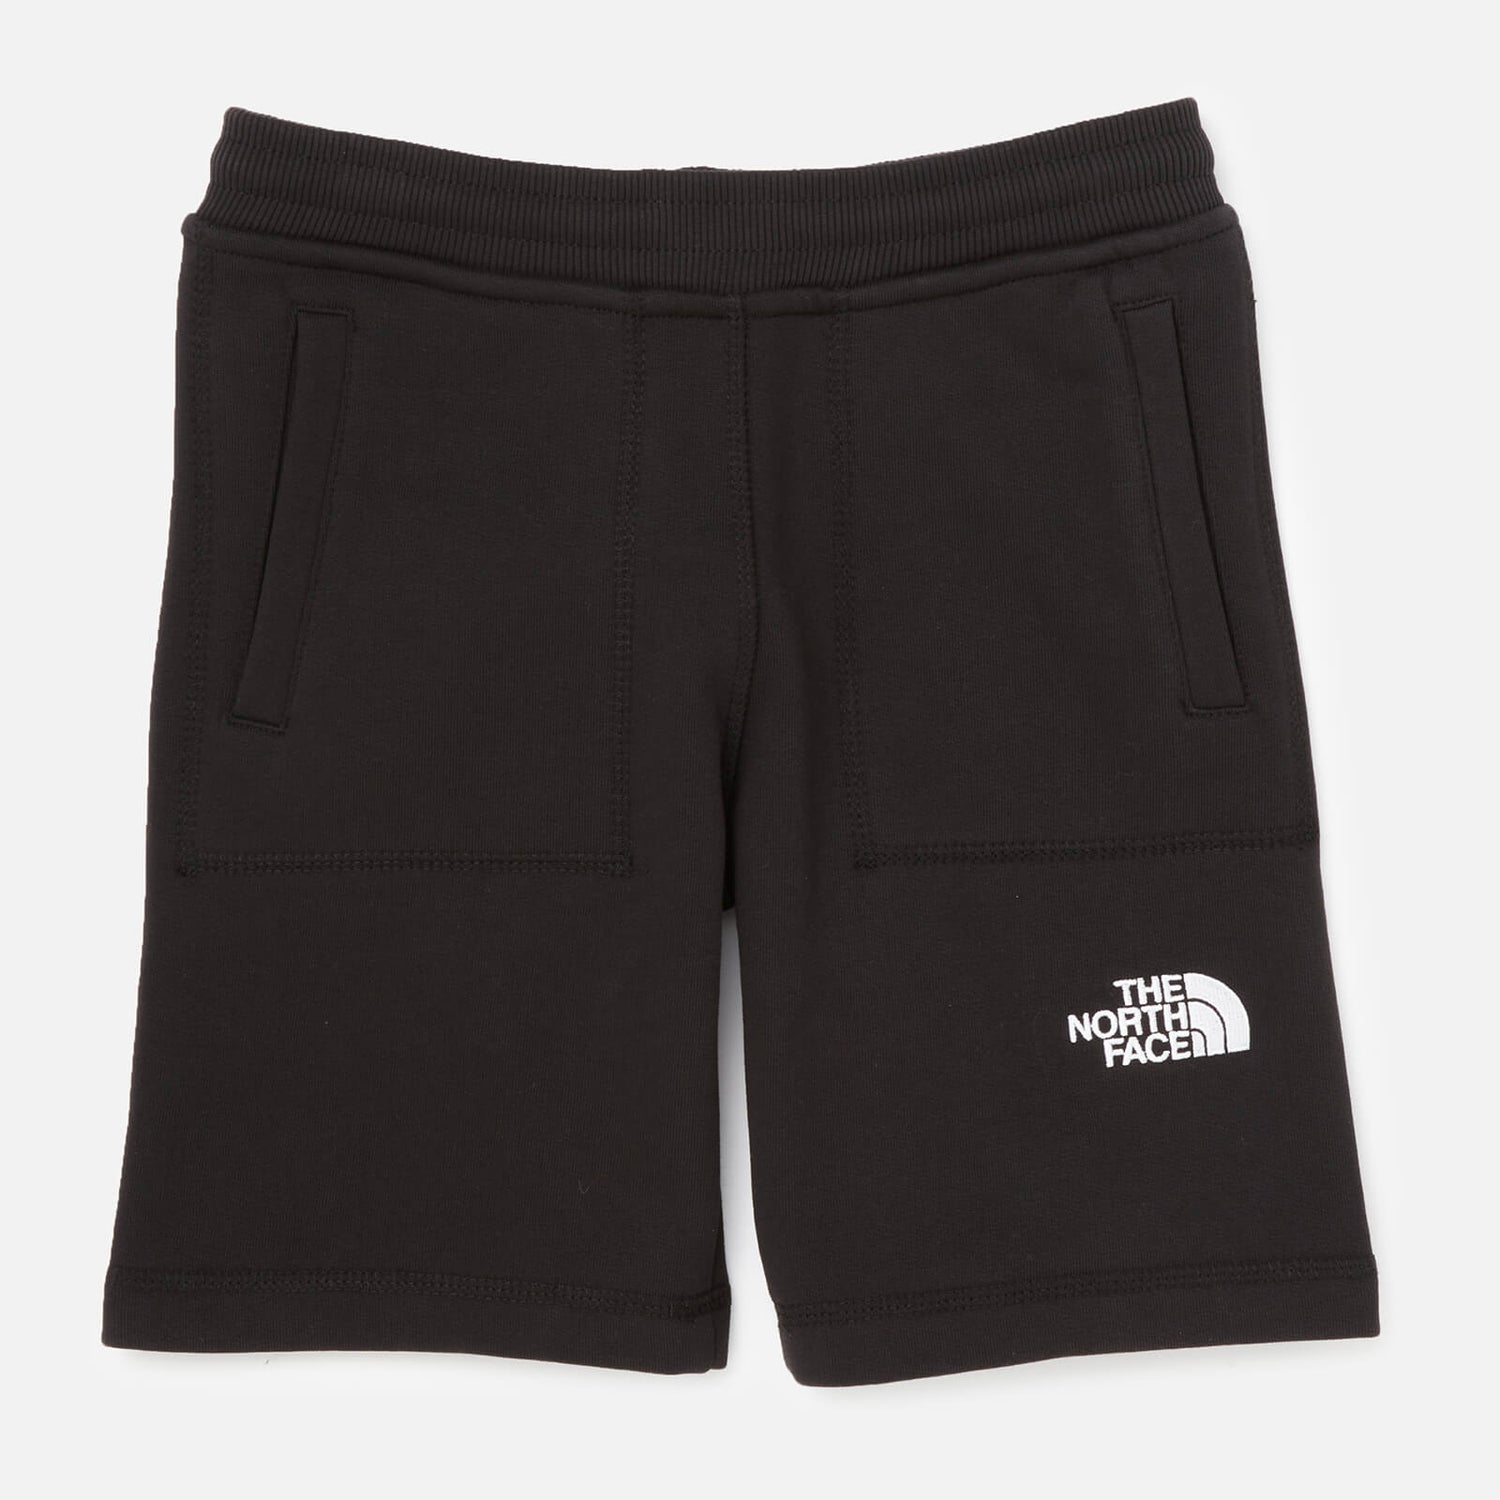 The North Face Boys' Youth Fleece Shorts - Black